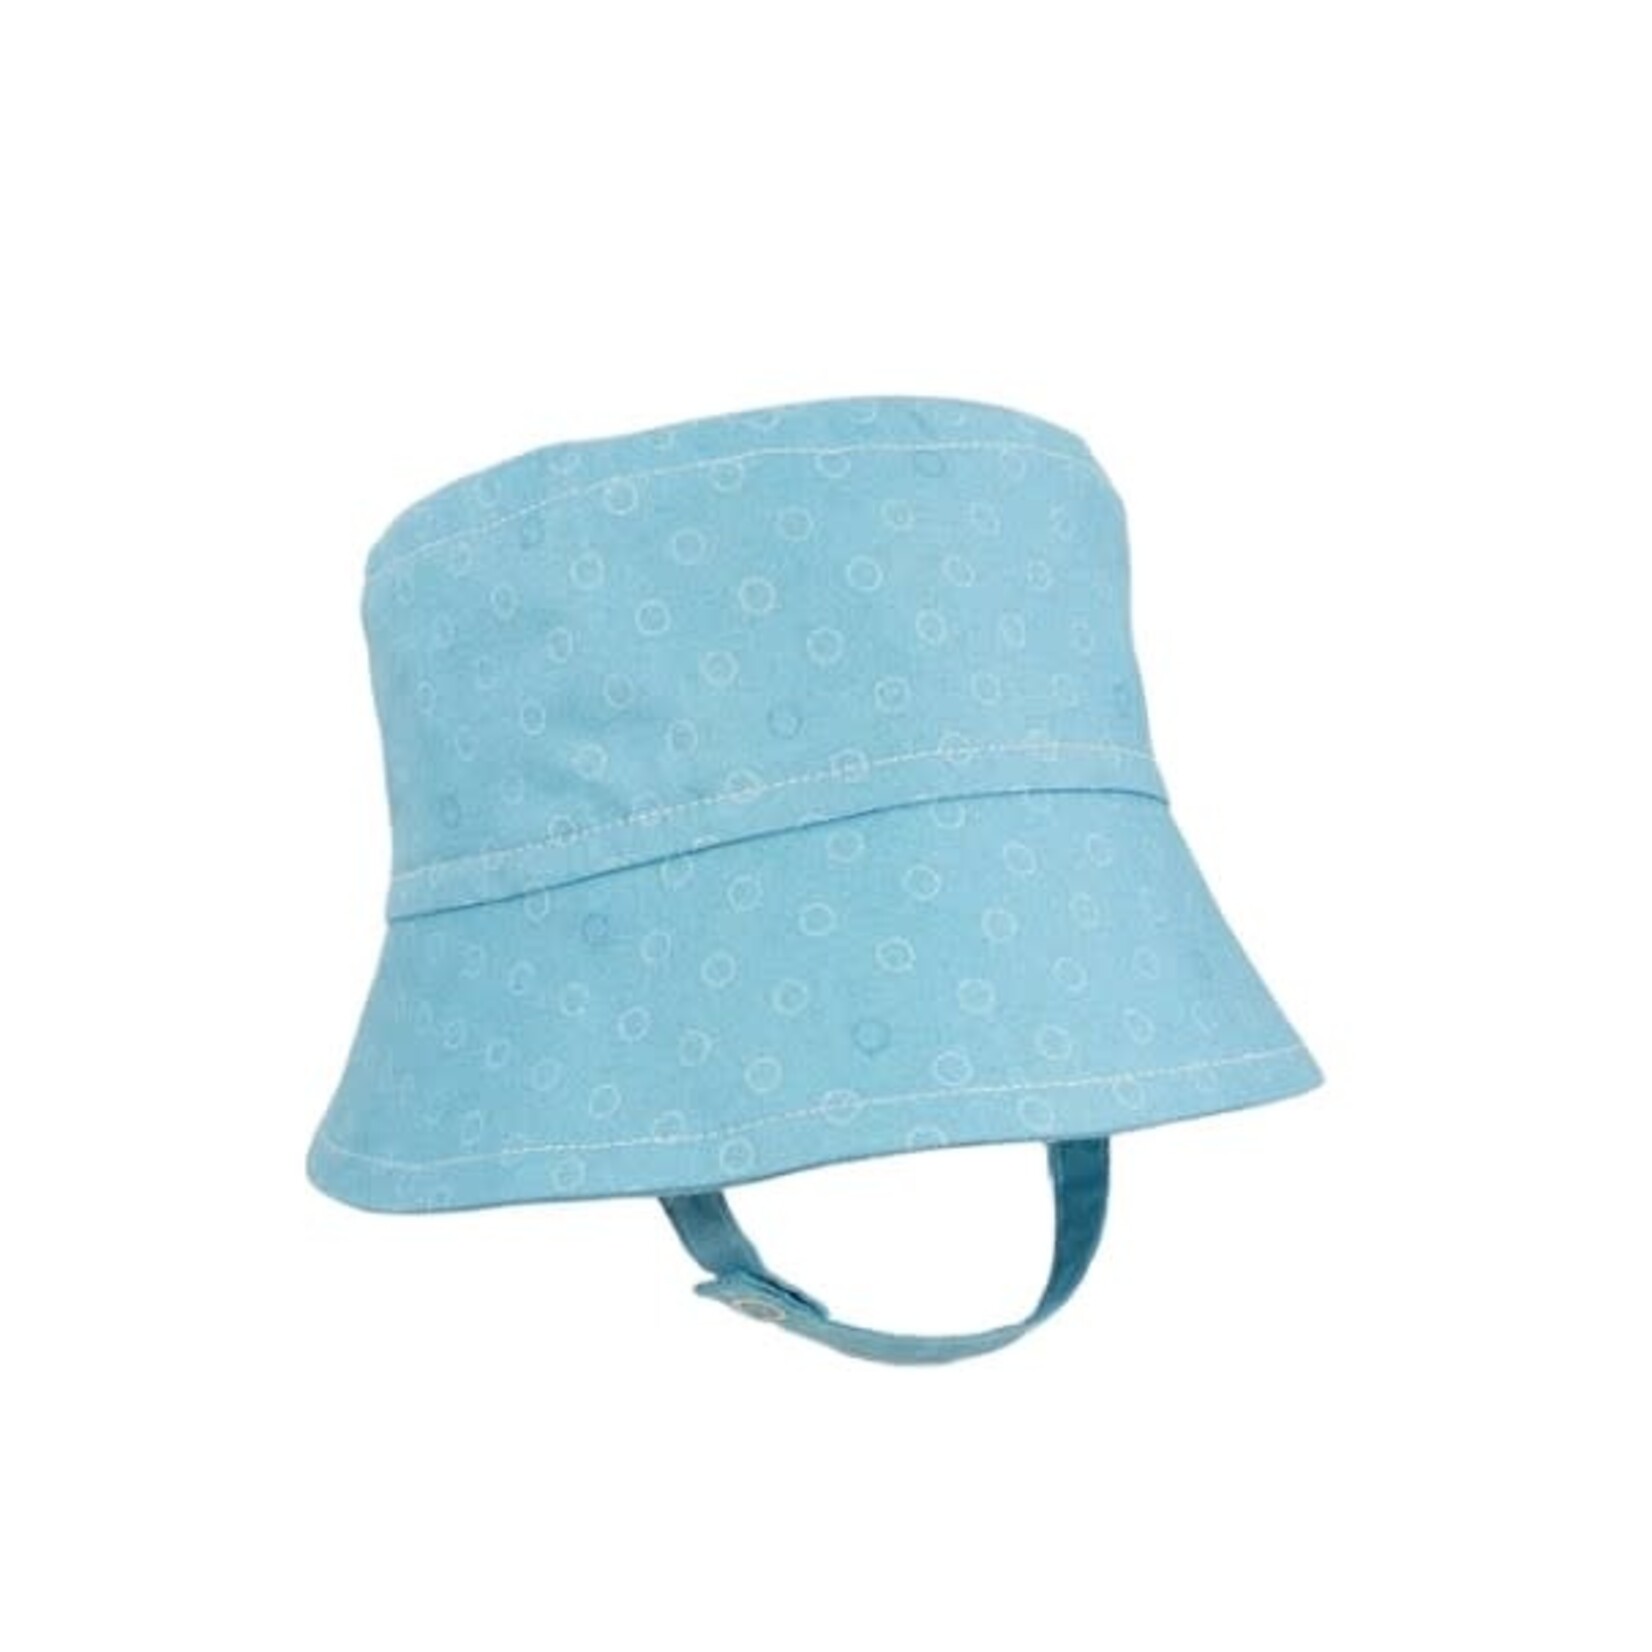 Tirigolo TIRIGOLO - Classic Cotton Adjustable Summer Hat - Turquoise circles